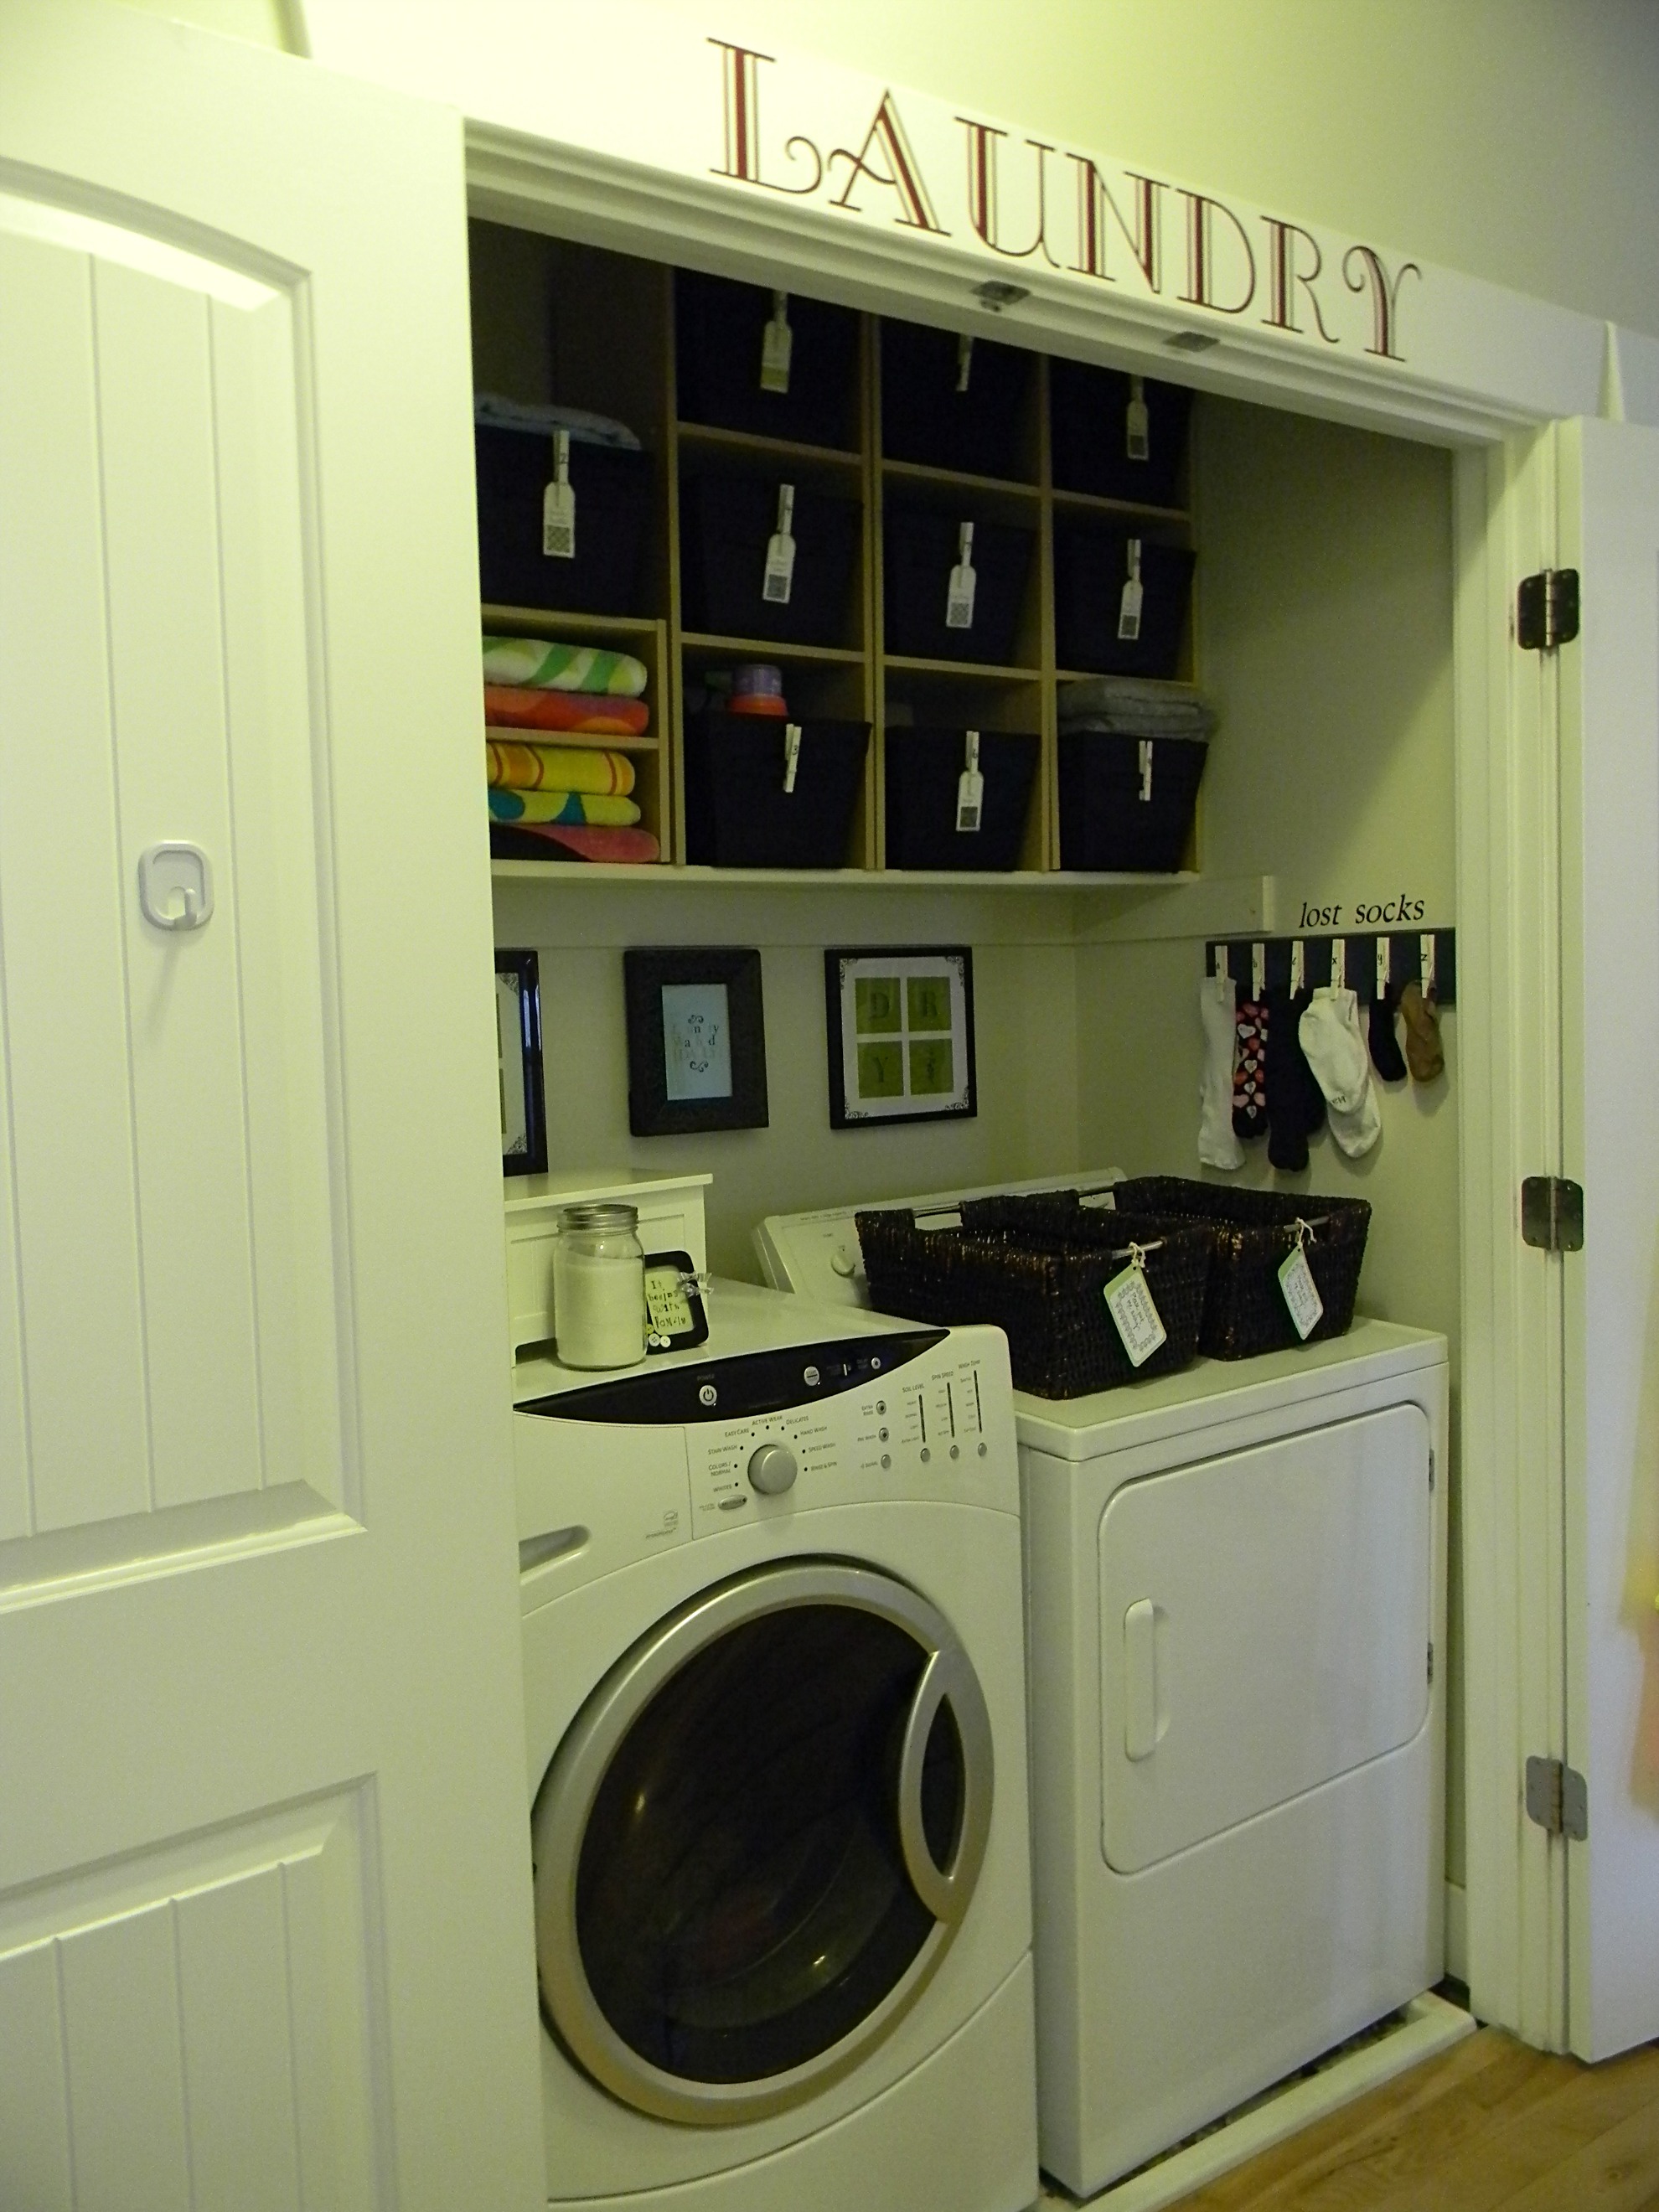 50 Best Laundry Room Design Ideas for 2022